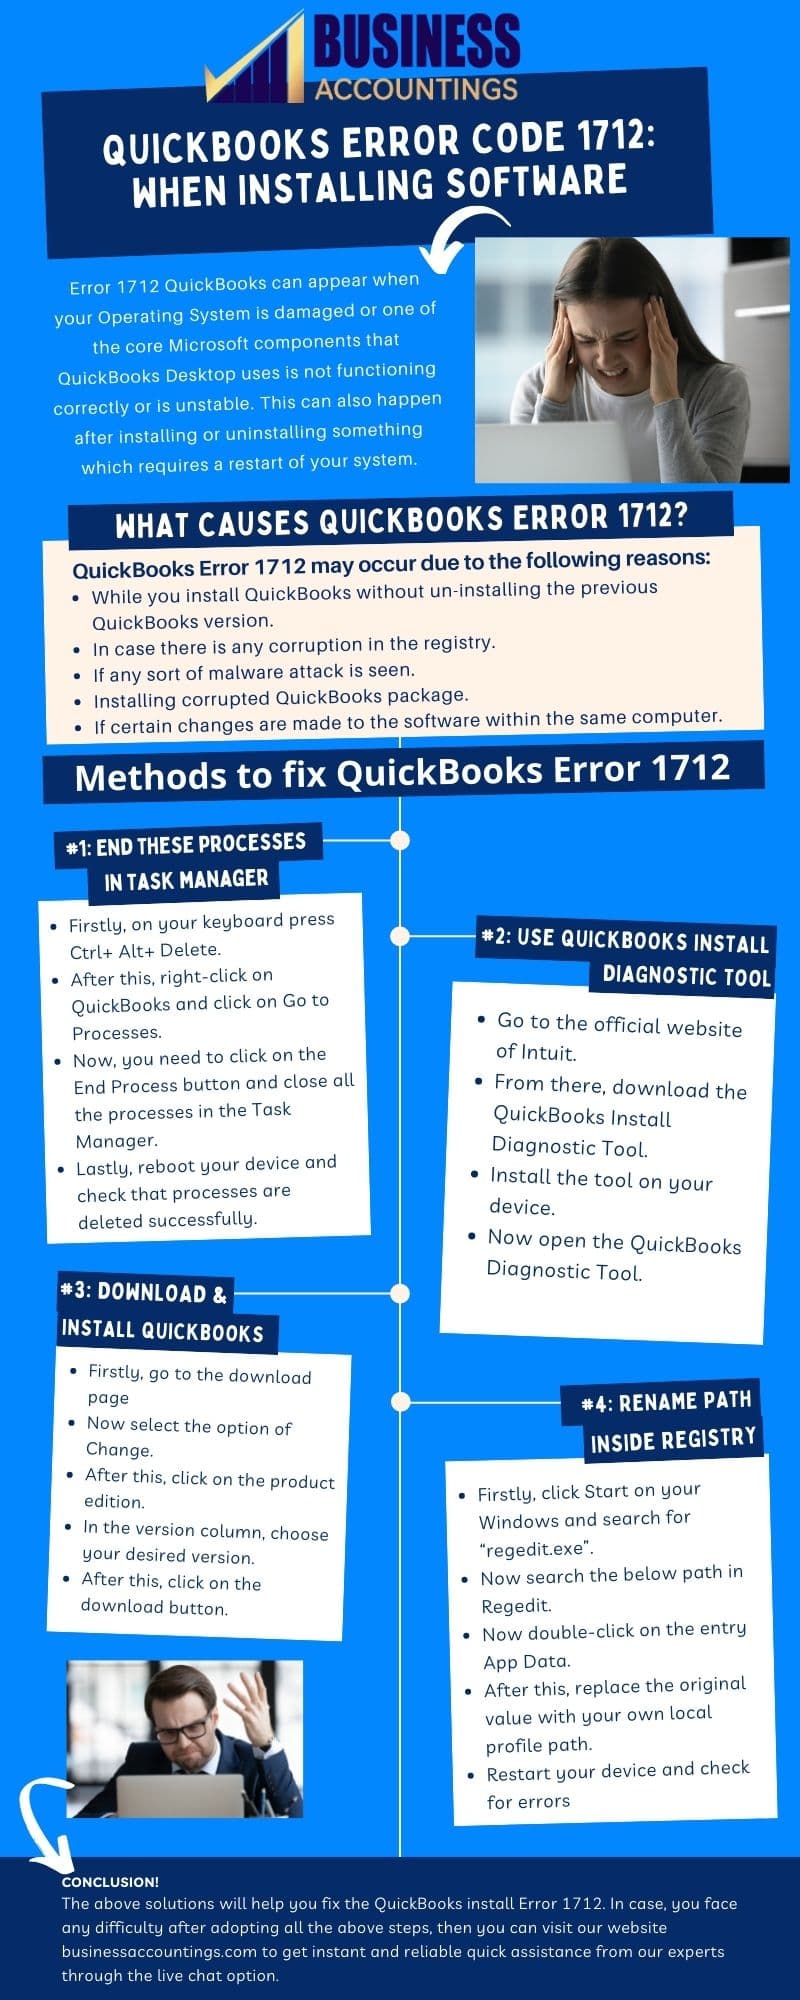 Infographic of Solutions for QuickBooks Error 1712